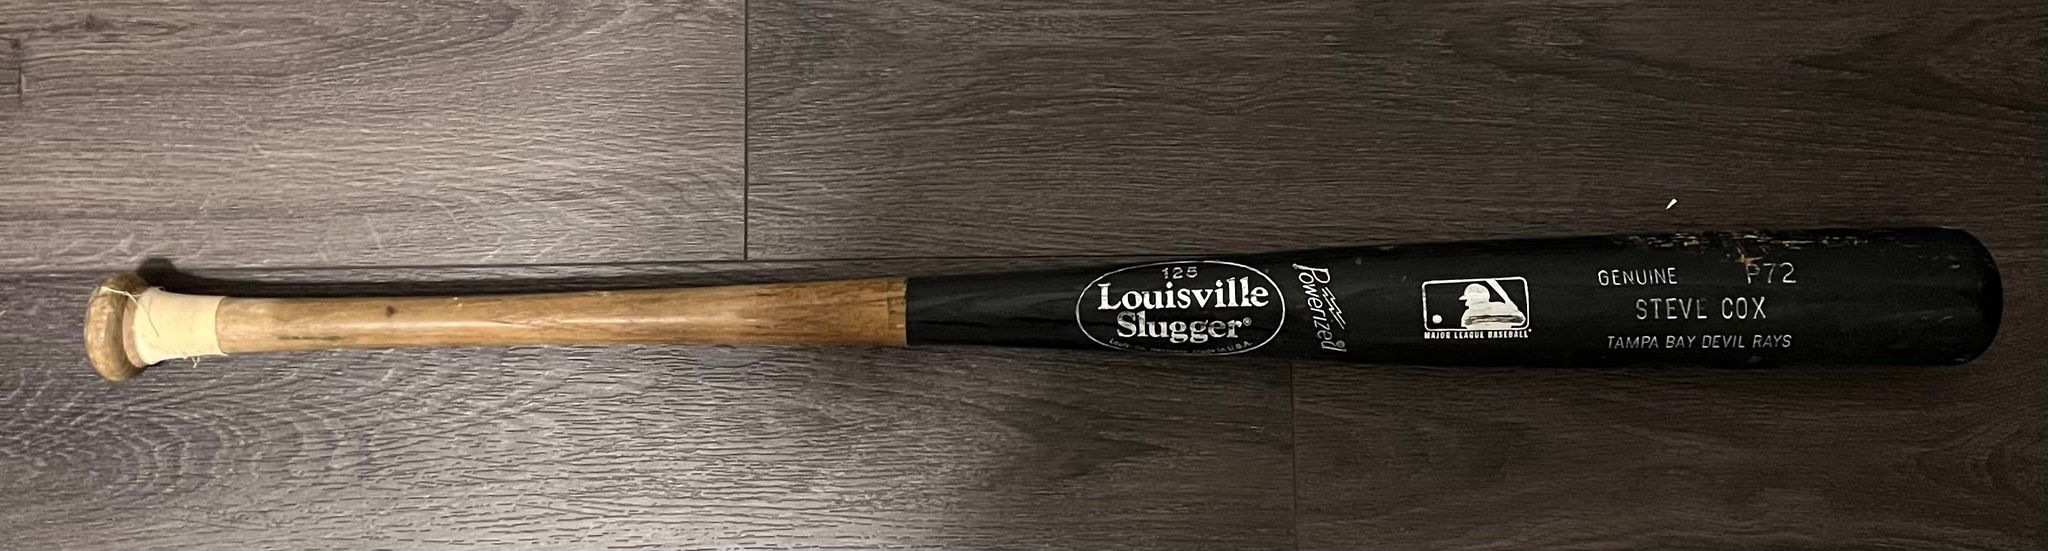 Adam Frazier Game Used Louisville Slugger Baseball Bat